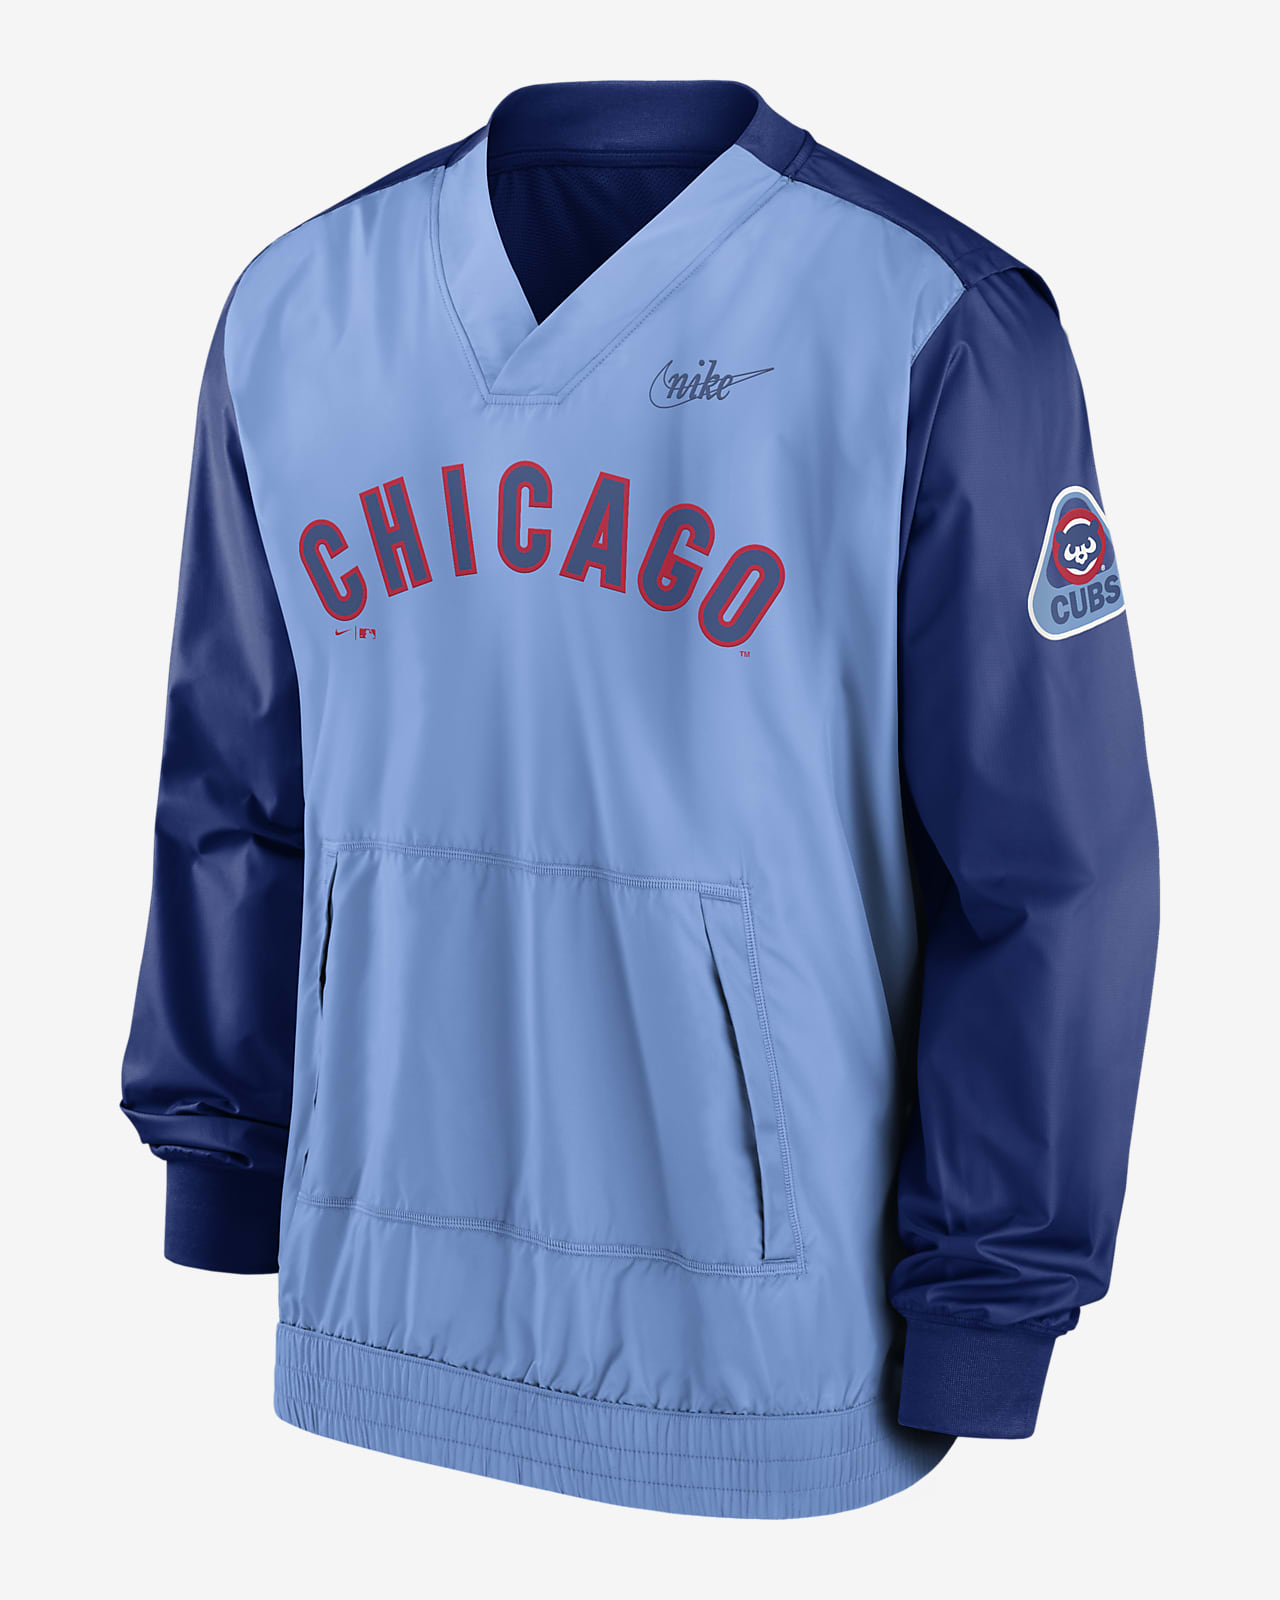 chicago cubs powder blue jersey